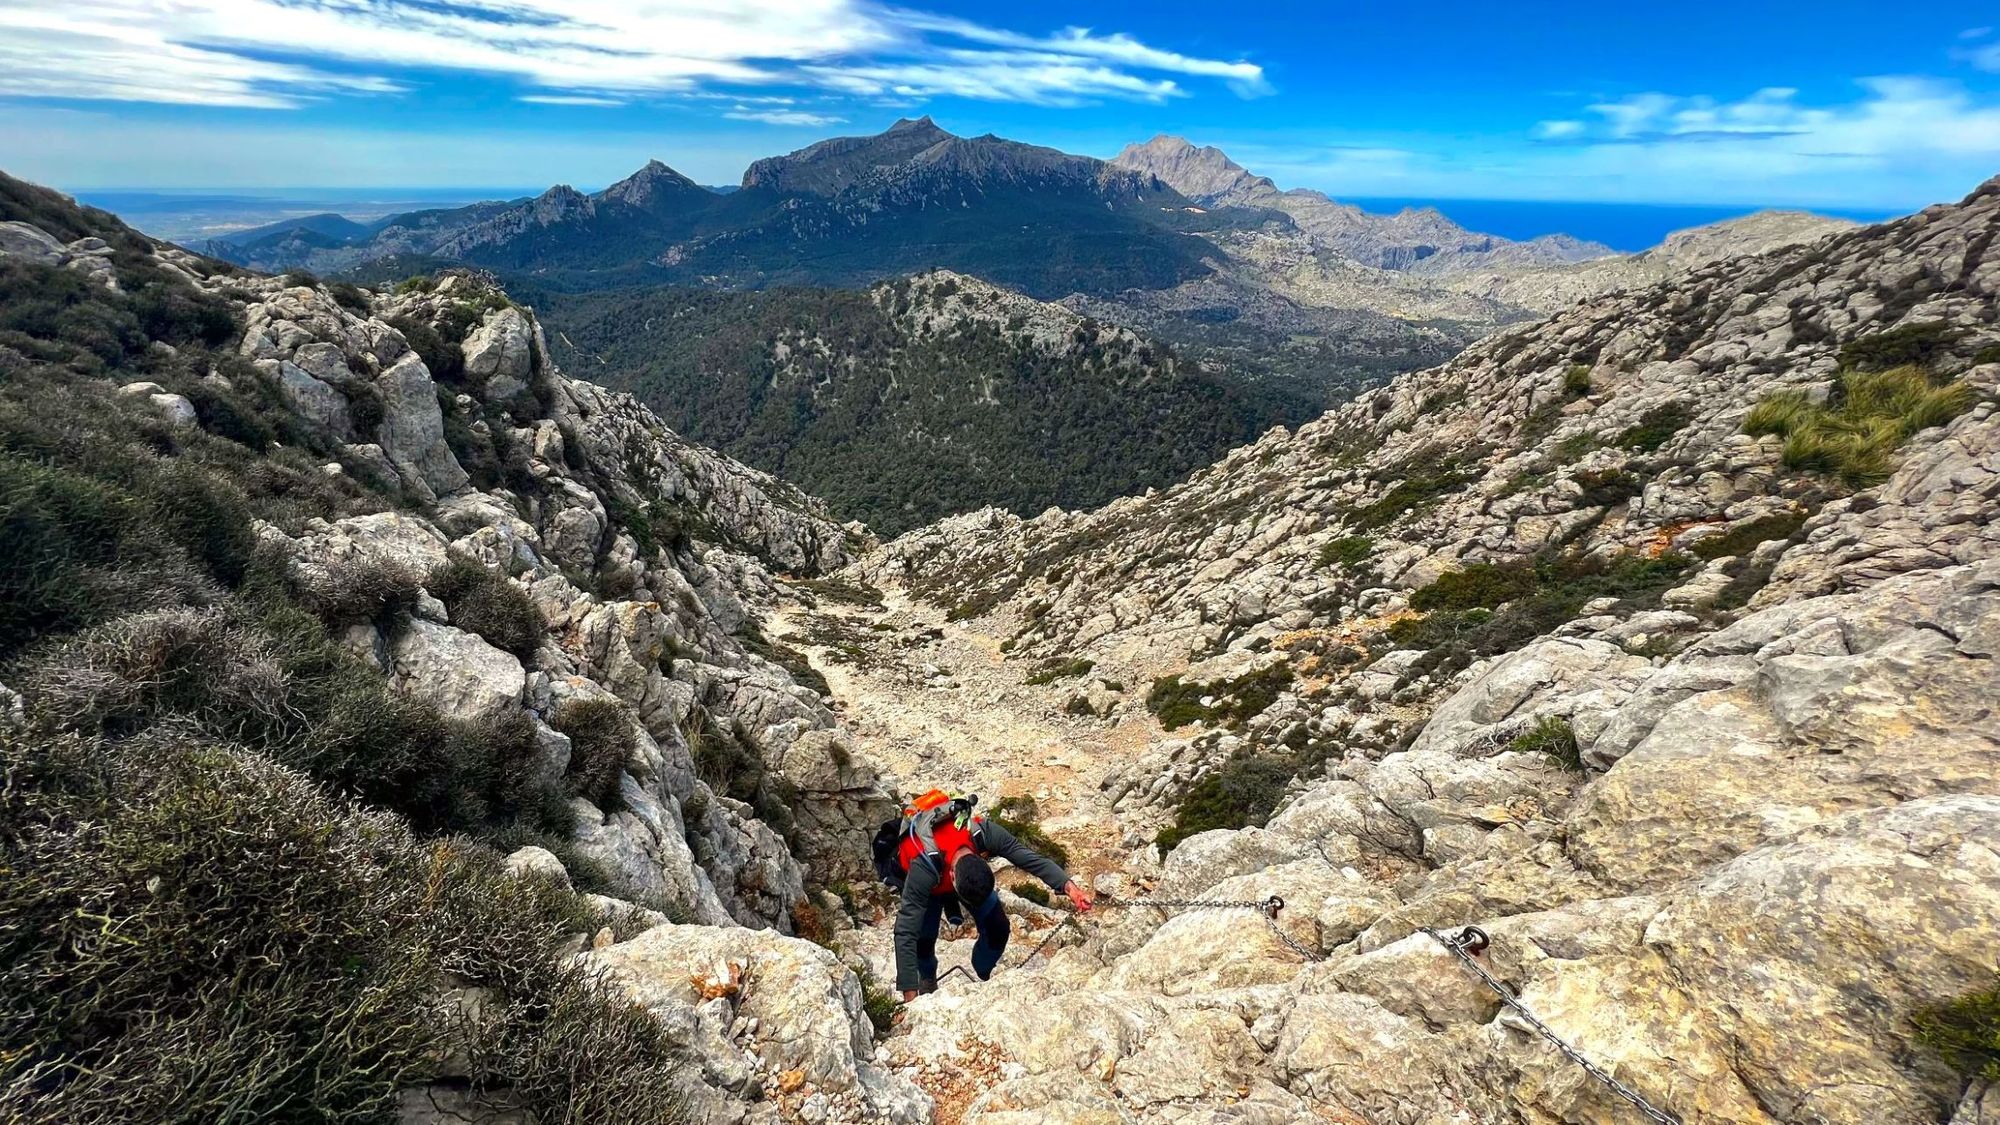 Climbing the peaks of the Serra de Tramuntana mountain range which provides the backbone of Mallorca. Photo: José Miguel Real